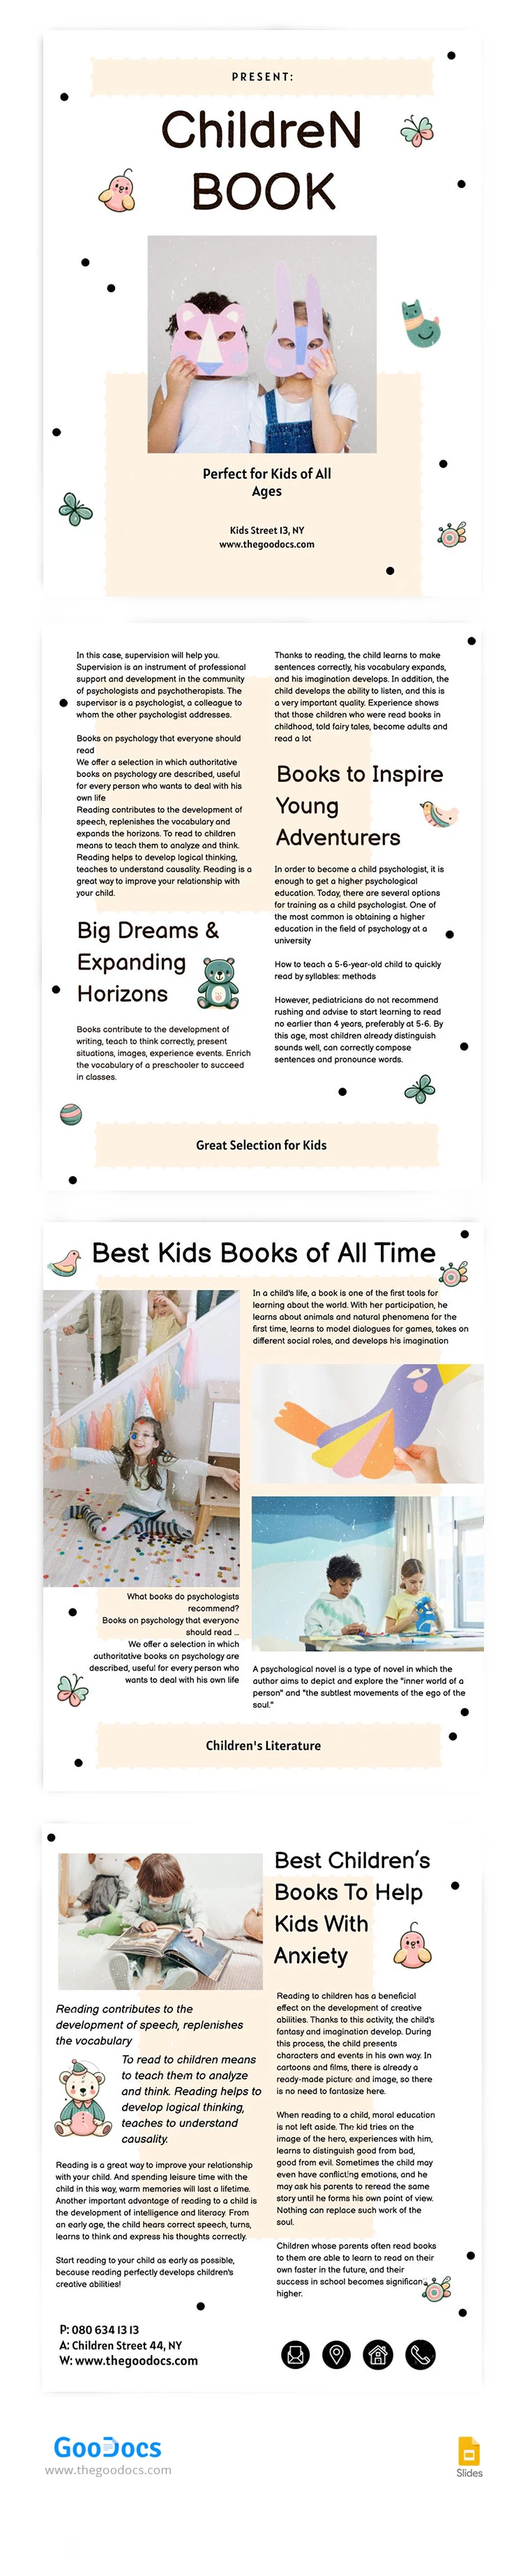 Children Book - free Google Docs Template - 10067467